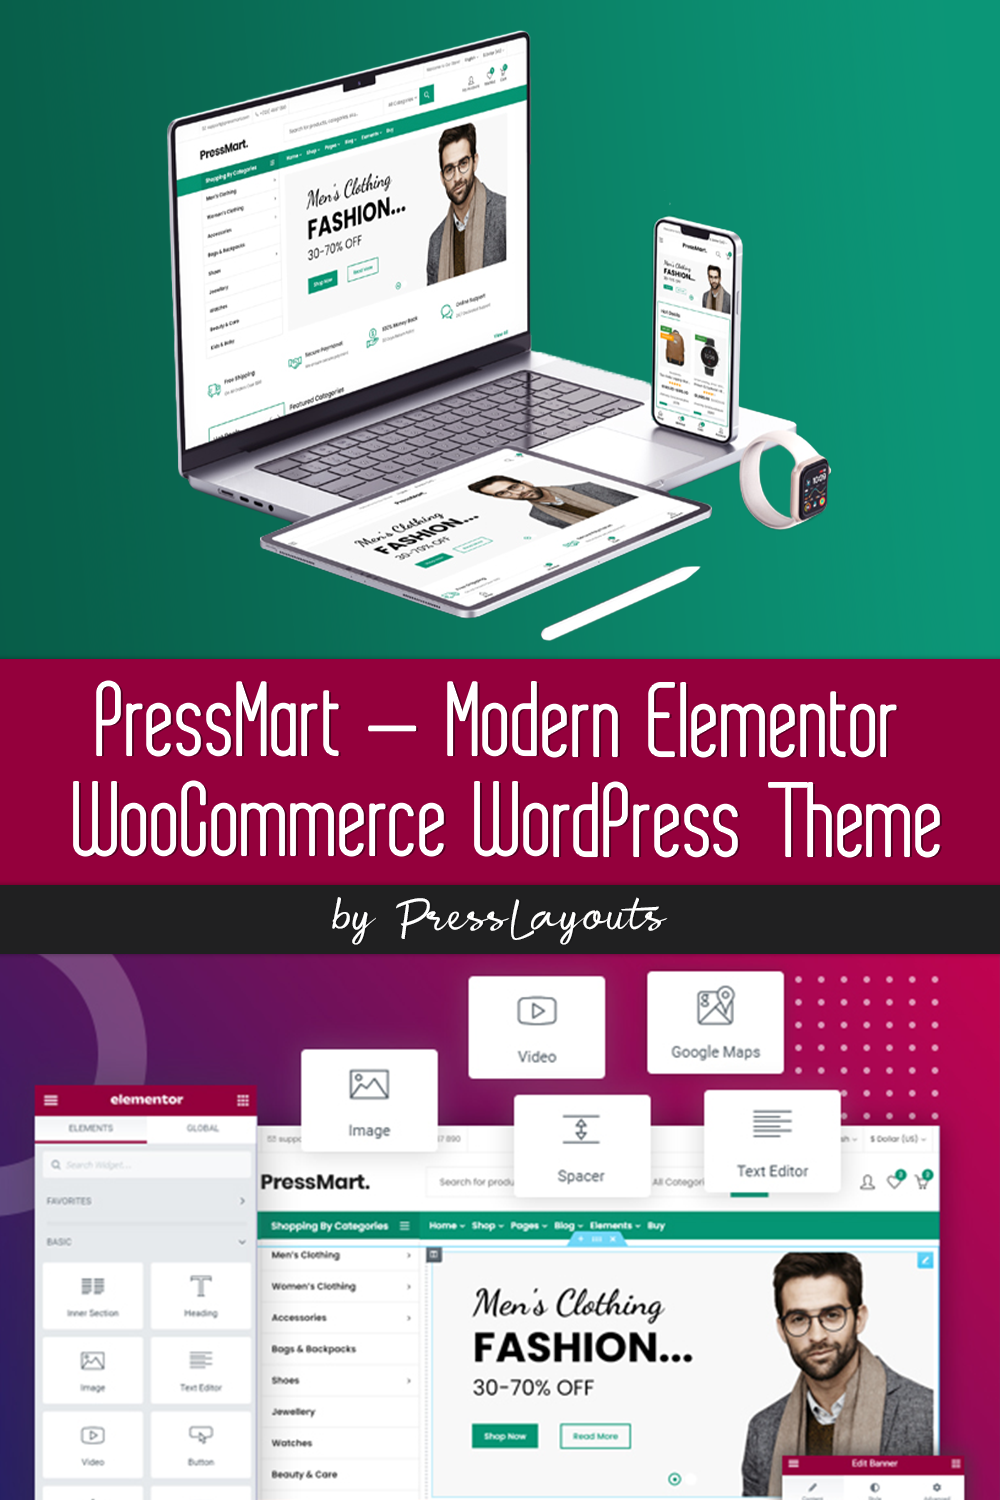 Pinterest of mart modern elementor woocommerce wordpress theme.